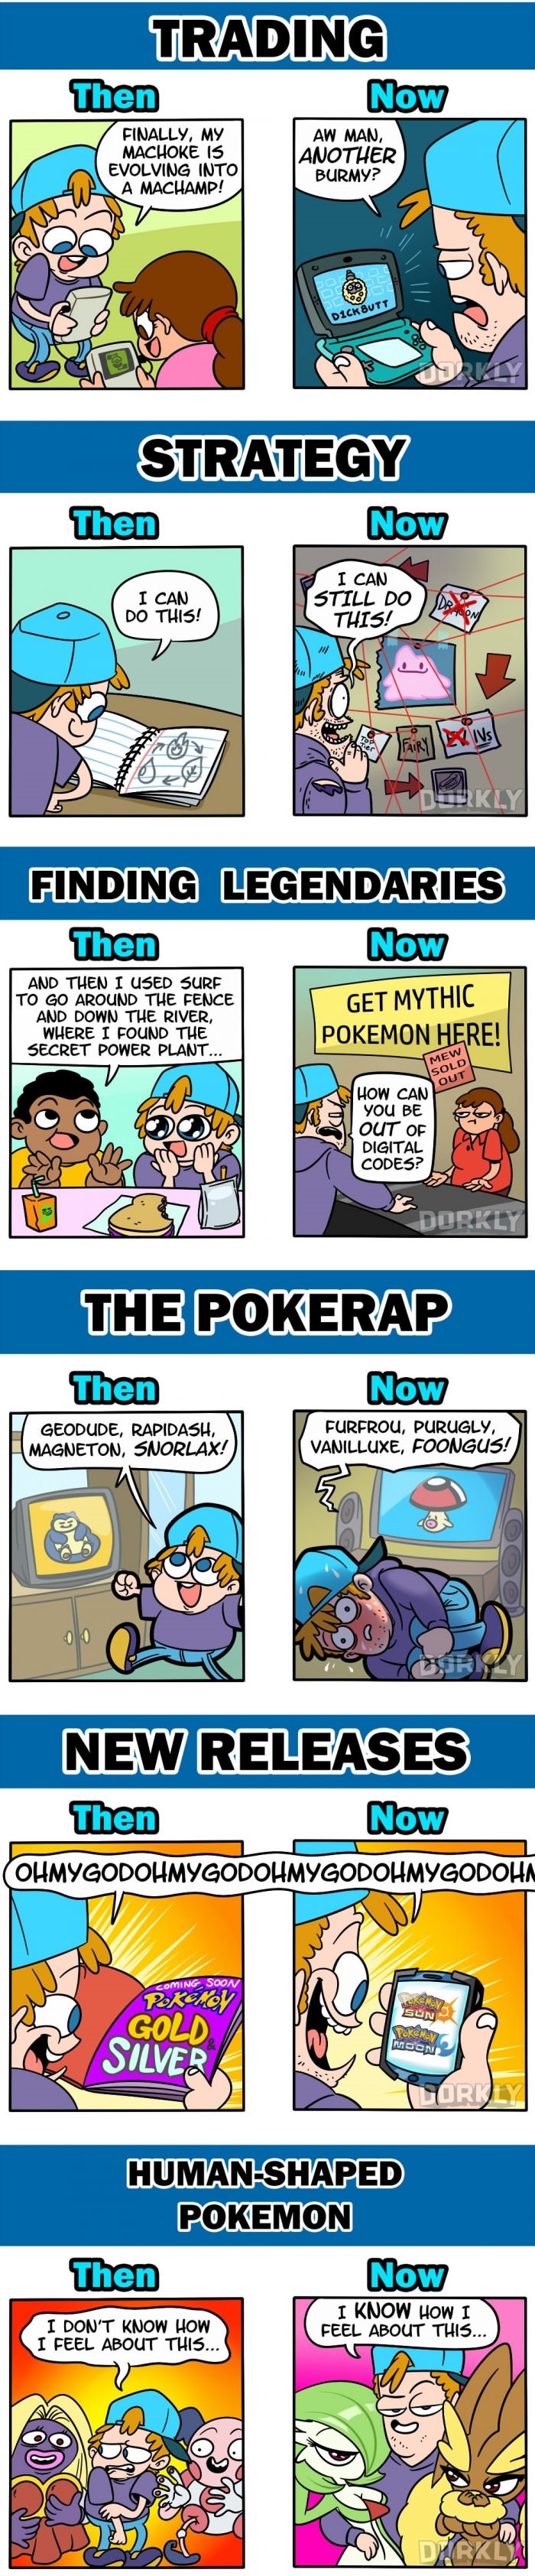 Pokemon then vs now